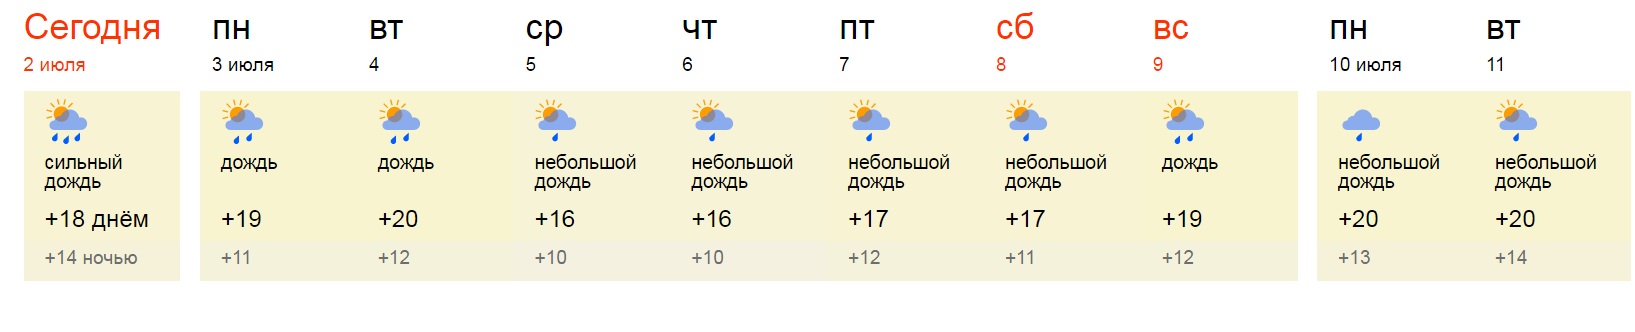 Прогноз на июль Яндекс.jpg